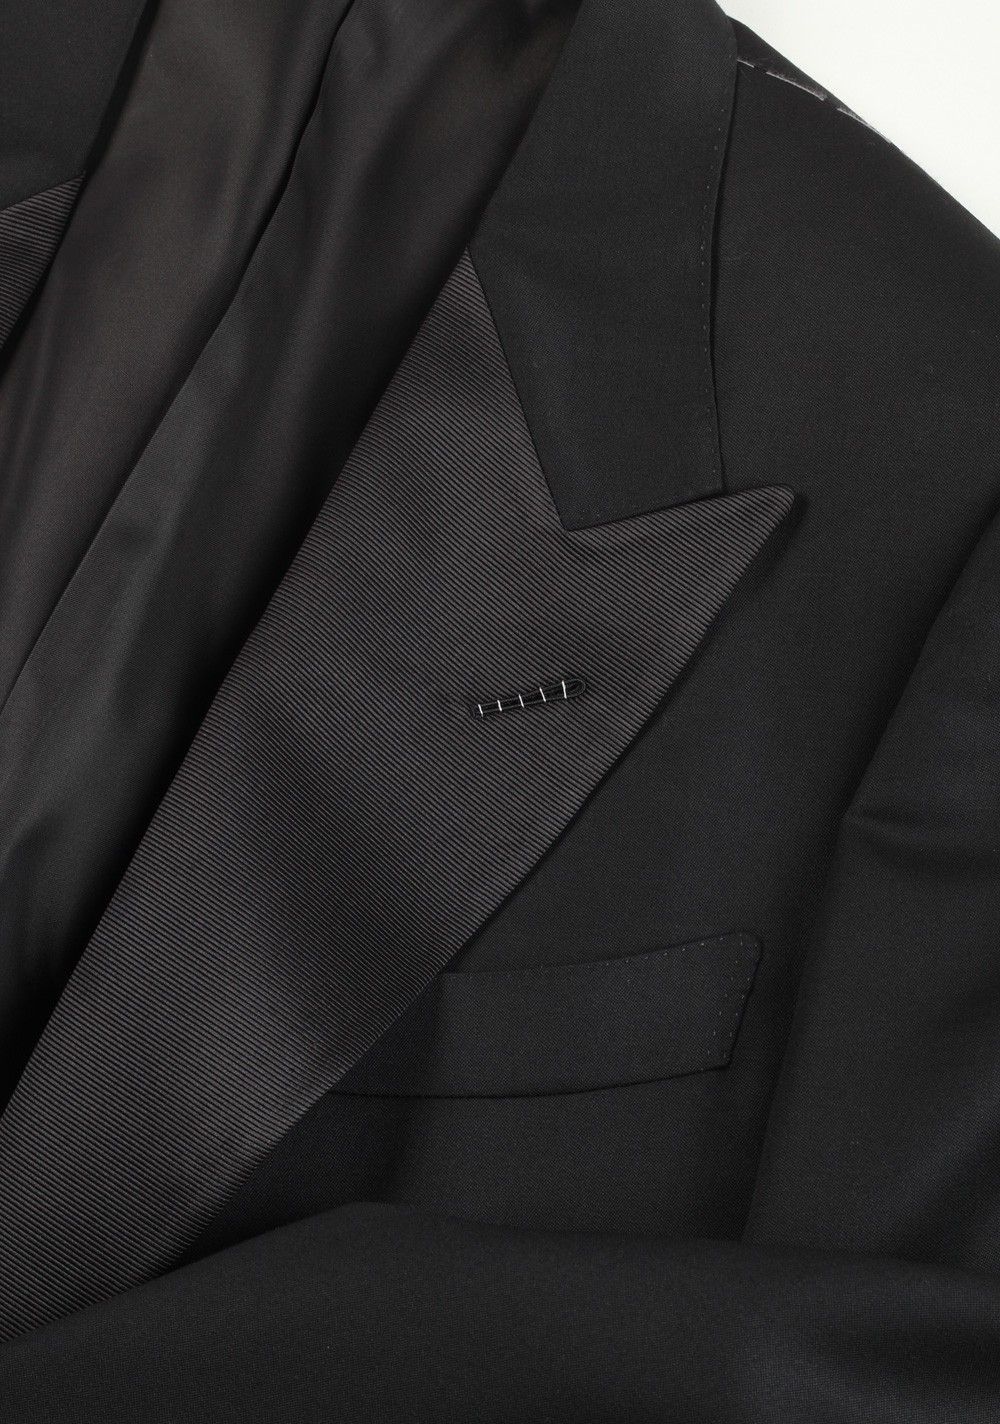 TOM FORD Windsor Black Tuxedo Smoking Suit Size 52 / 42R U.S. Fit A | Costume Limité